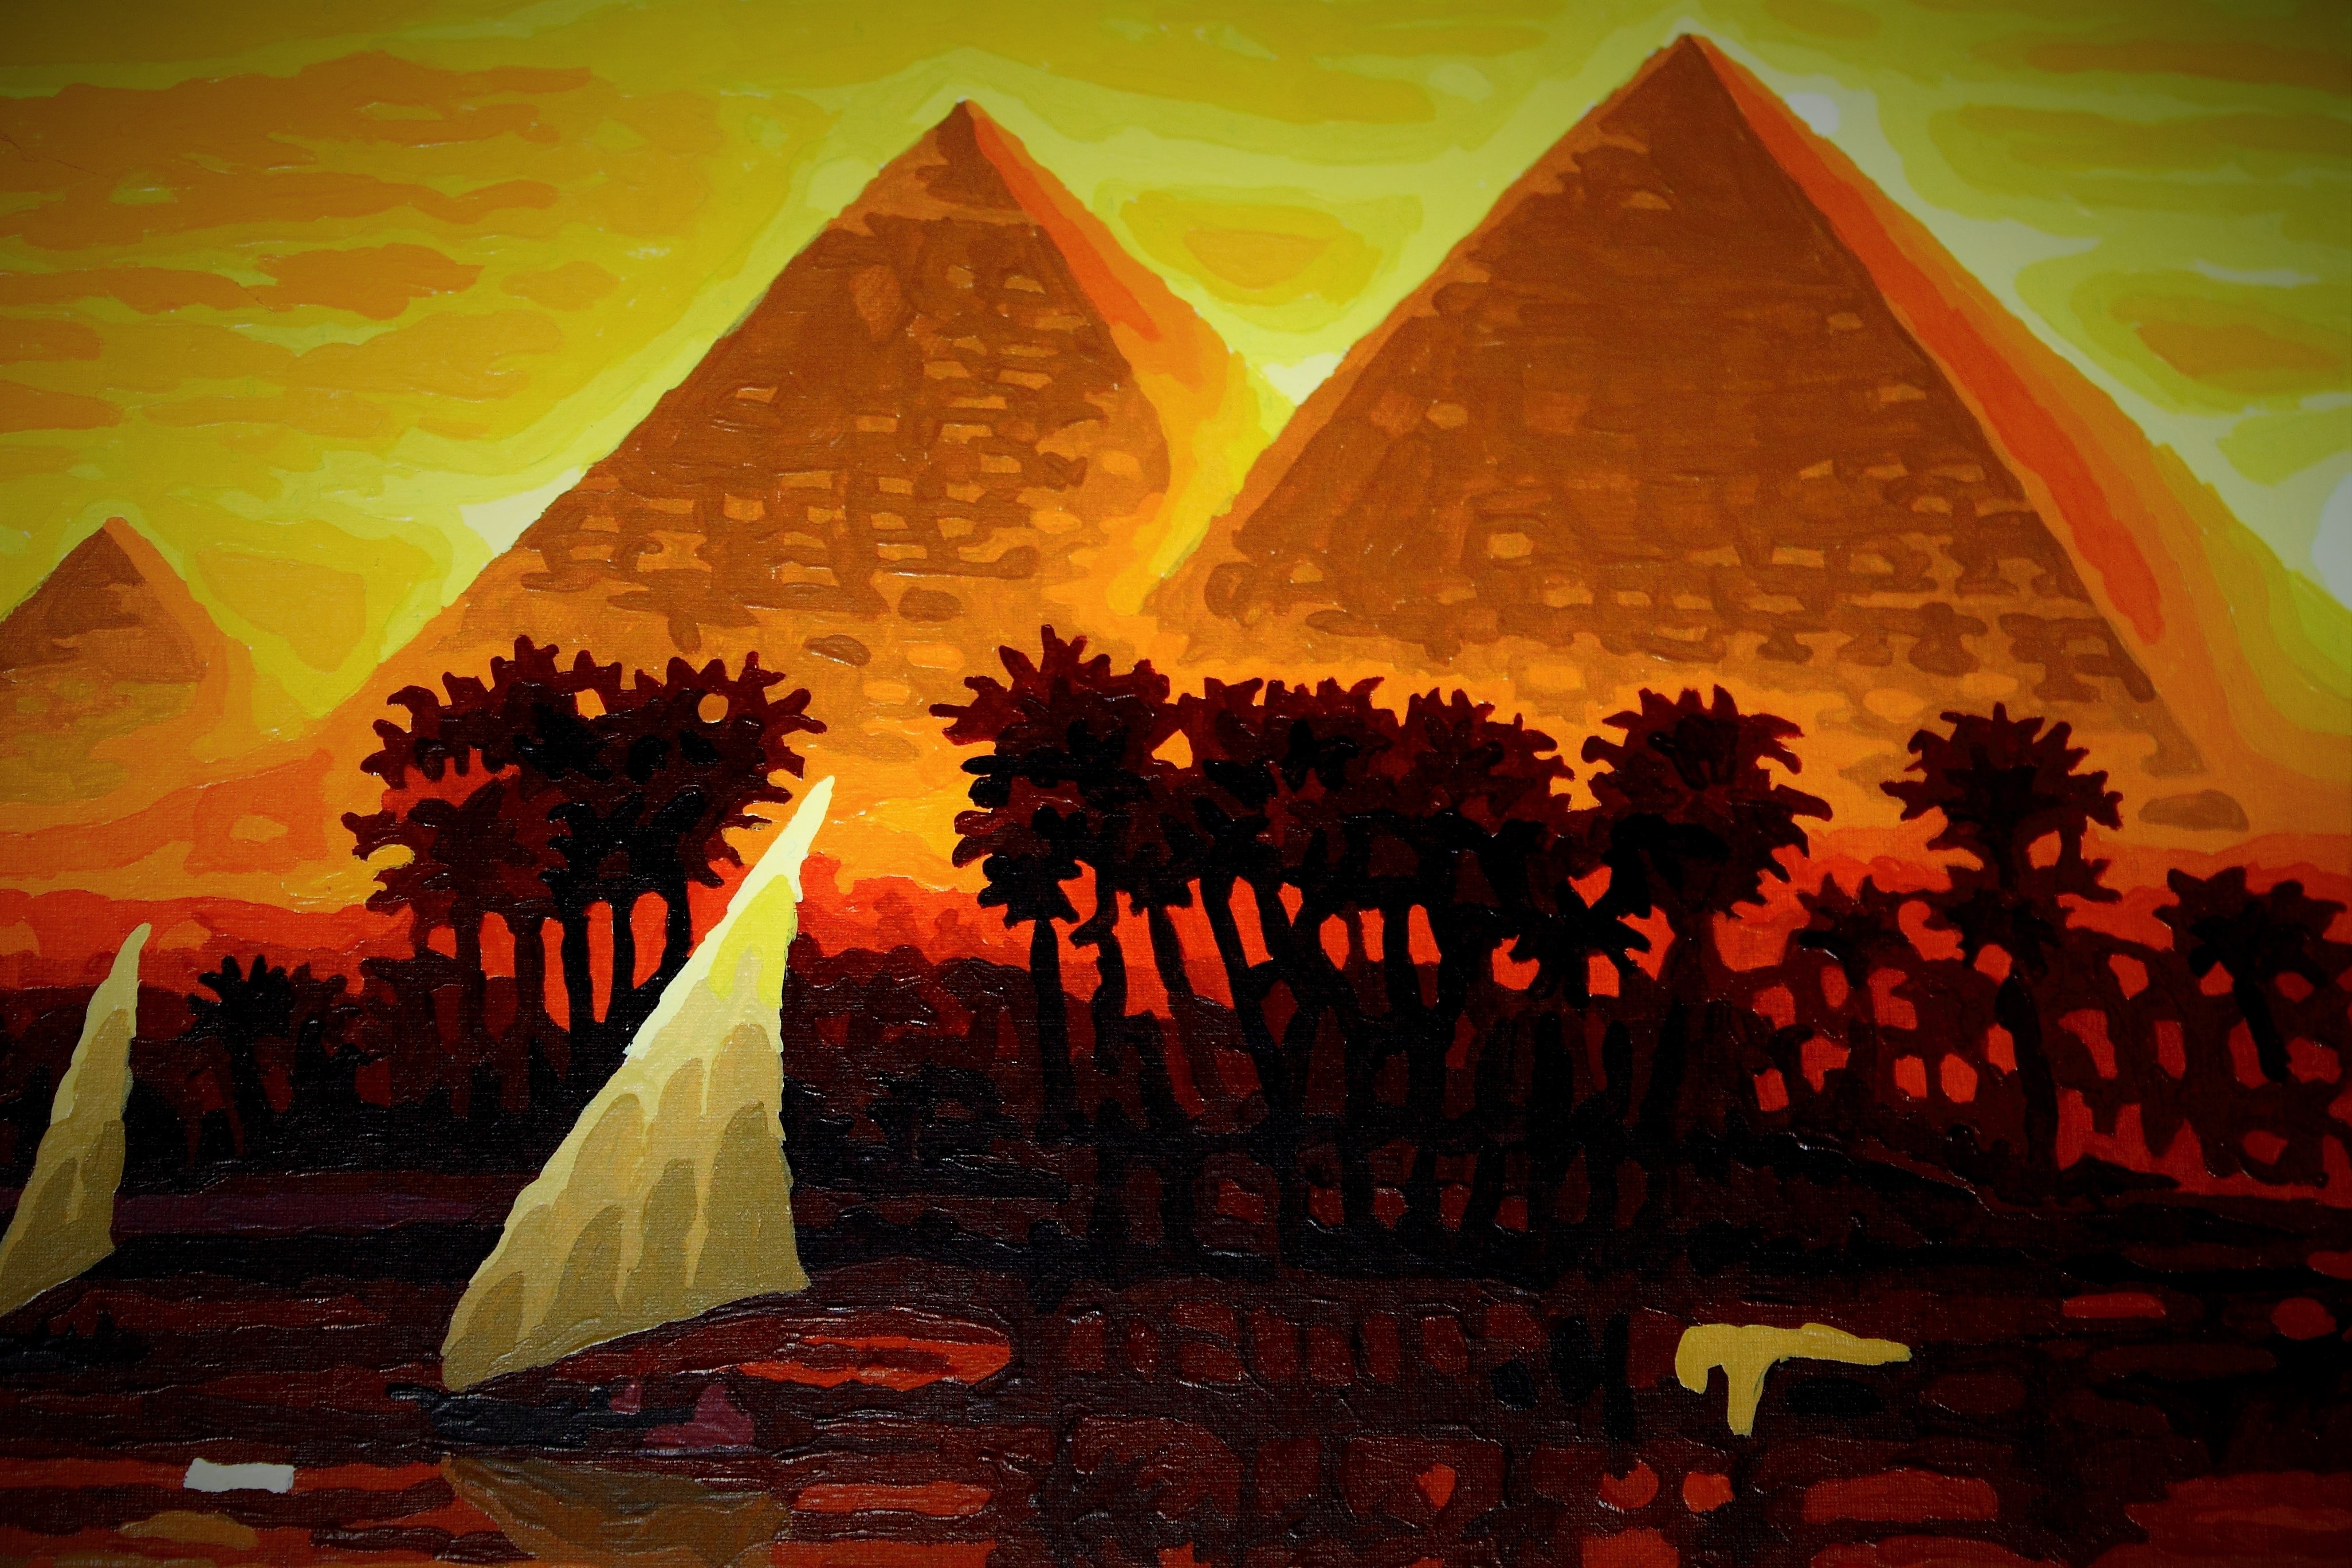 three pyramids of egypt